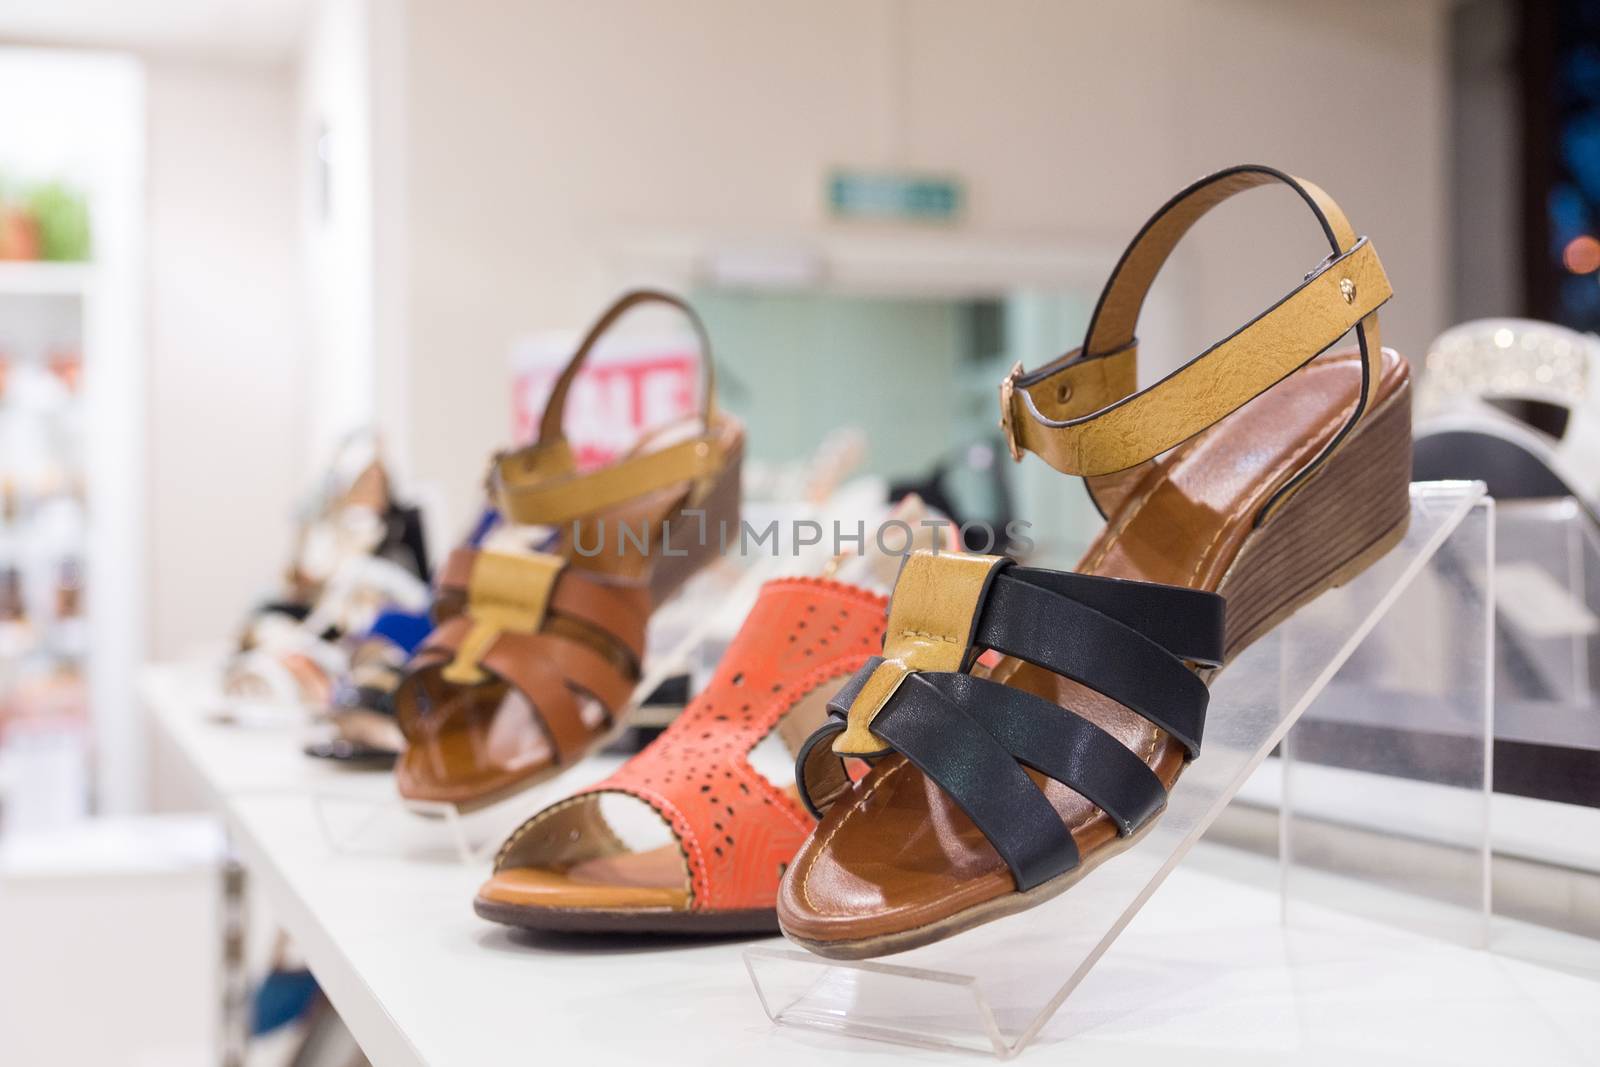 Women's shoes in a shop by AlexBush